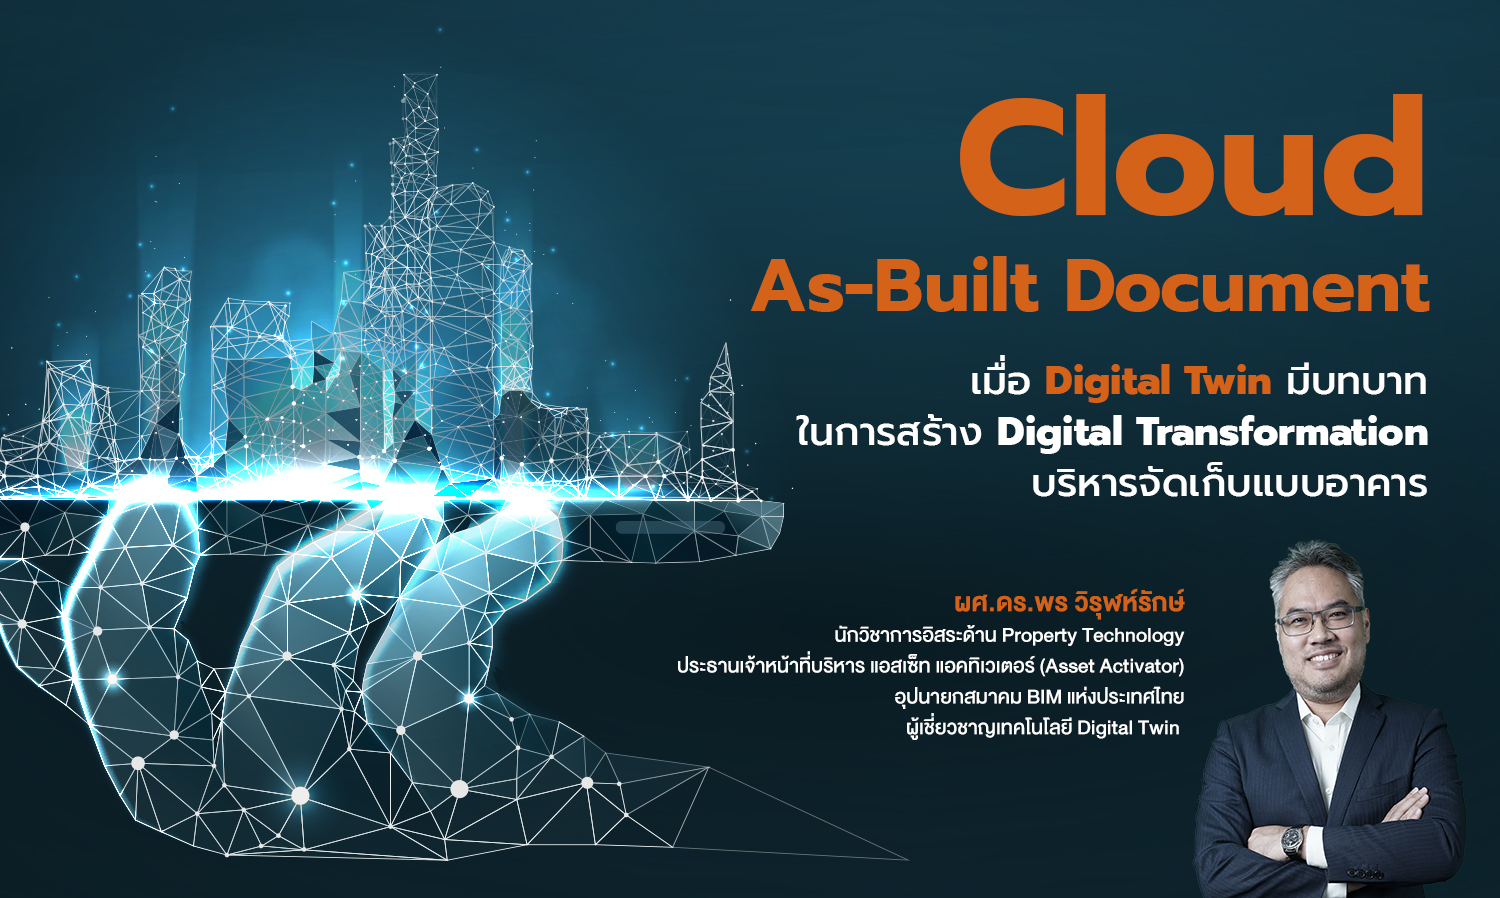 “Cloud As-Built Document”  เมื่อ Digital Twin มีบทบาทในการสร้าง Digital Transformation บริหารจัดเก็บแบบอาคาร